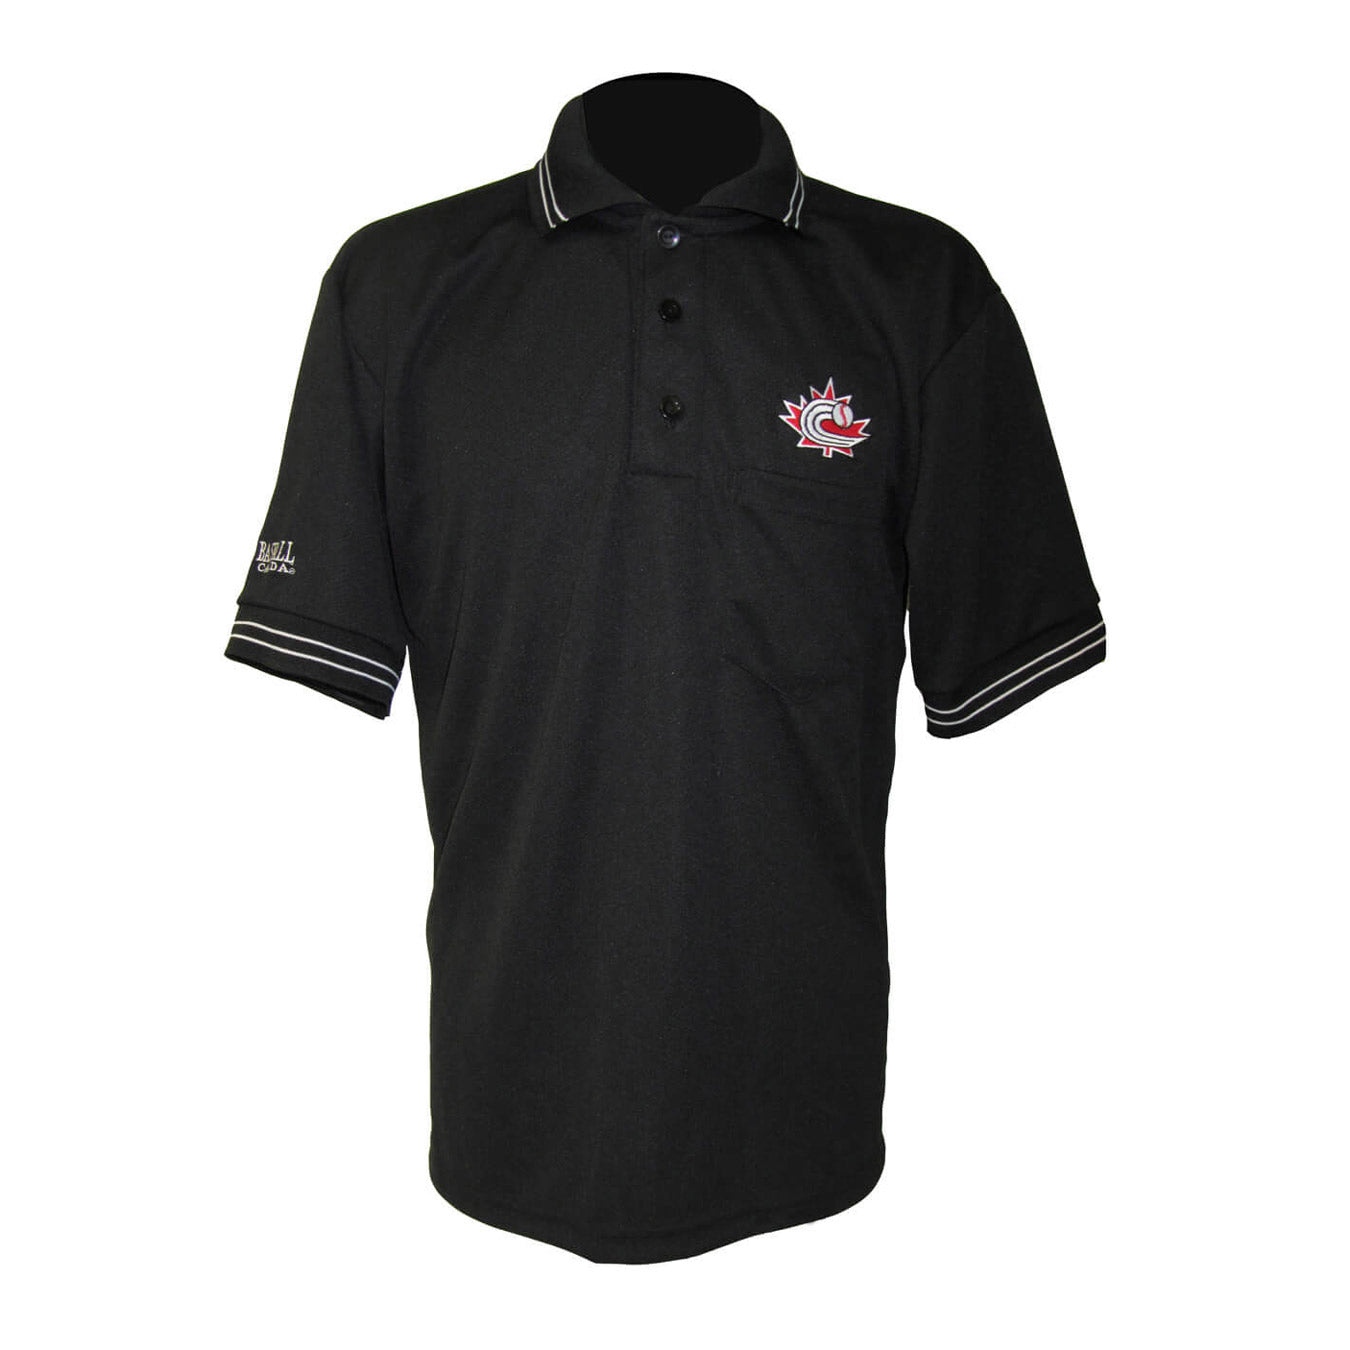 Baseball Canada Performance Mesh Umpire Shirt - Black